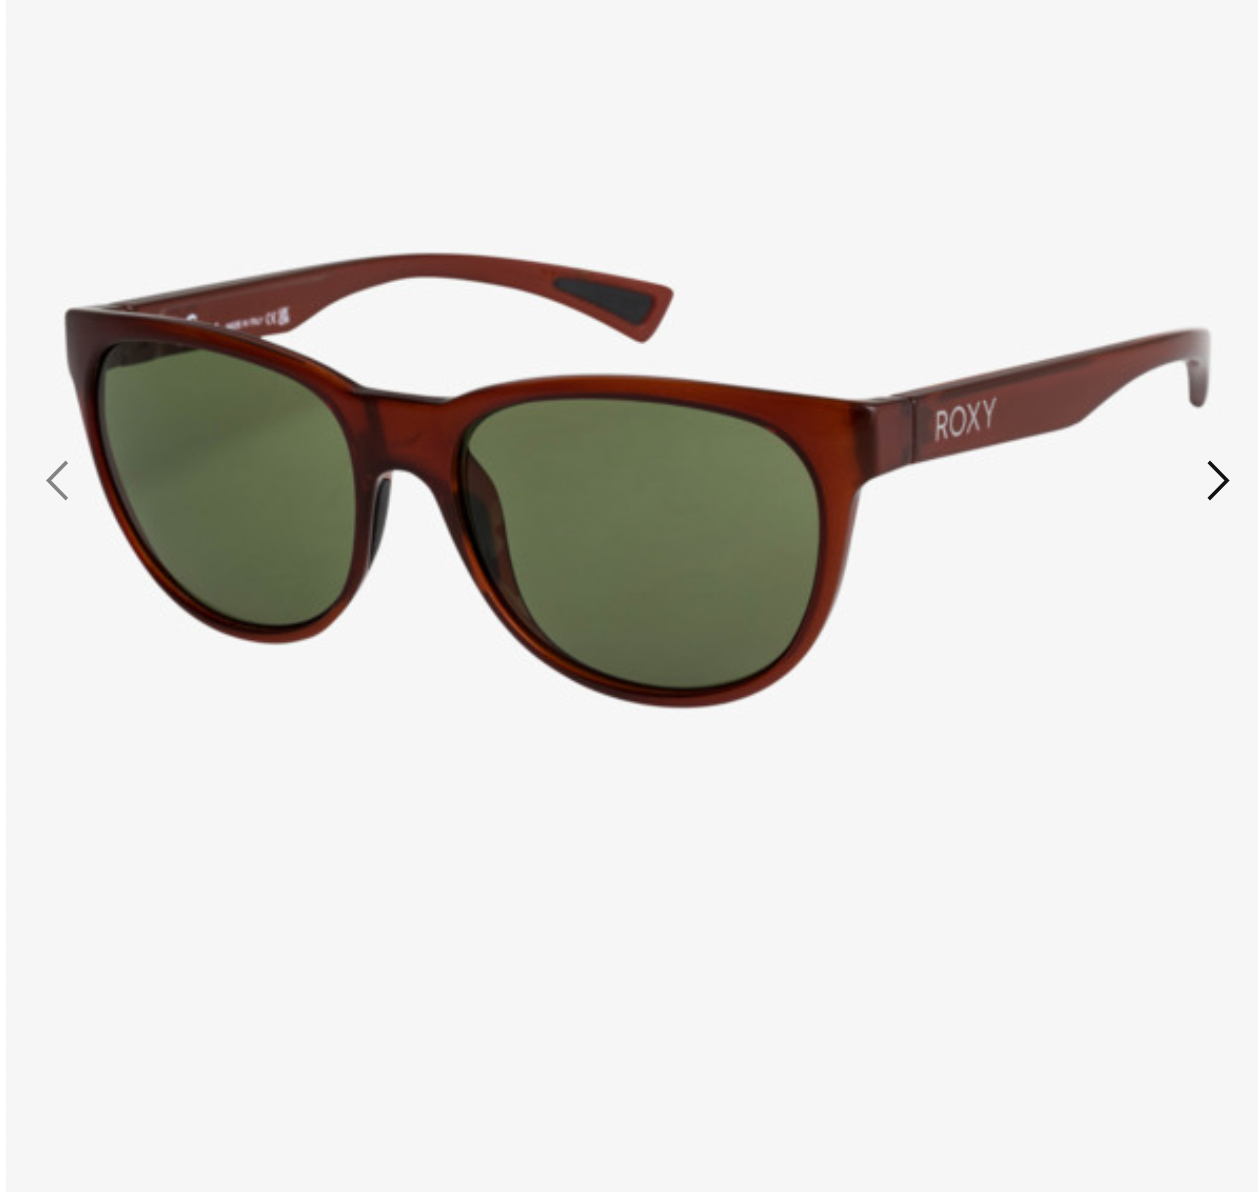 ROXY Gina - Sunglasses for Women